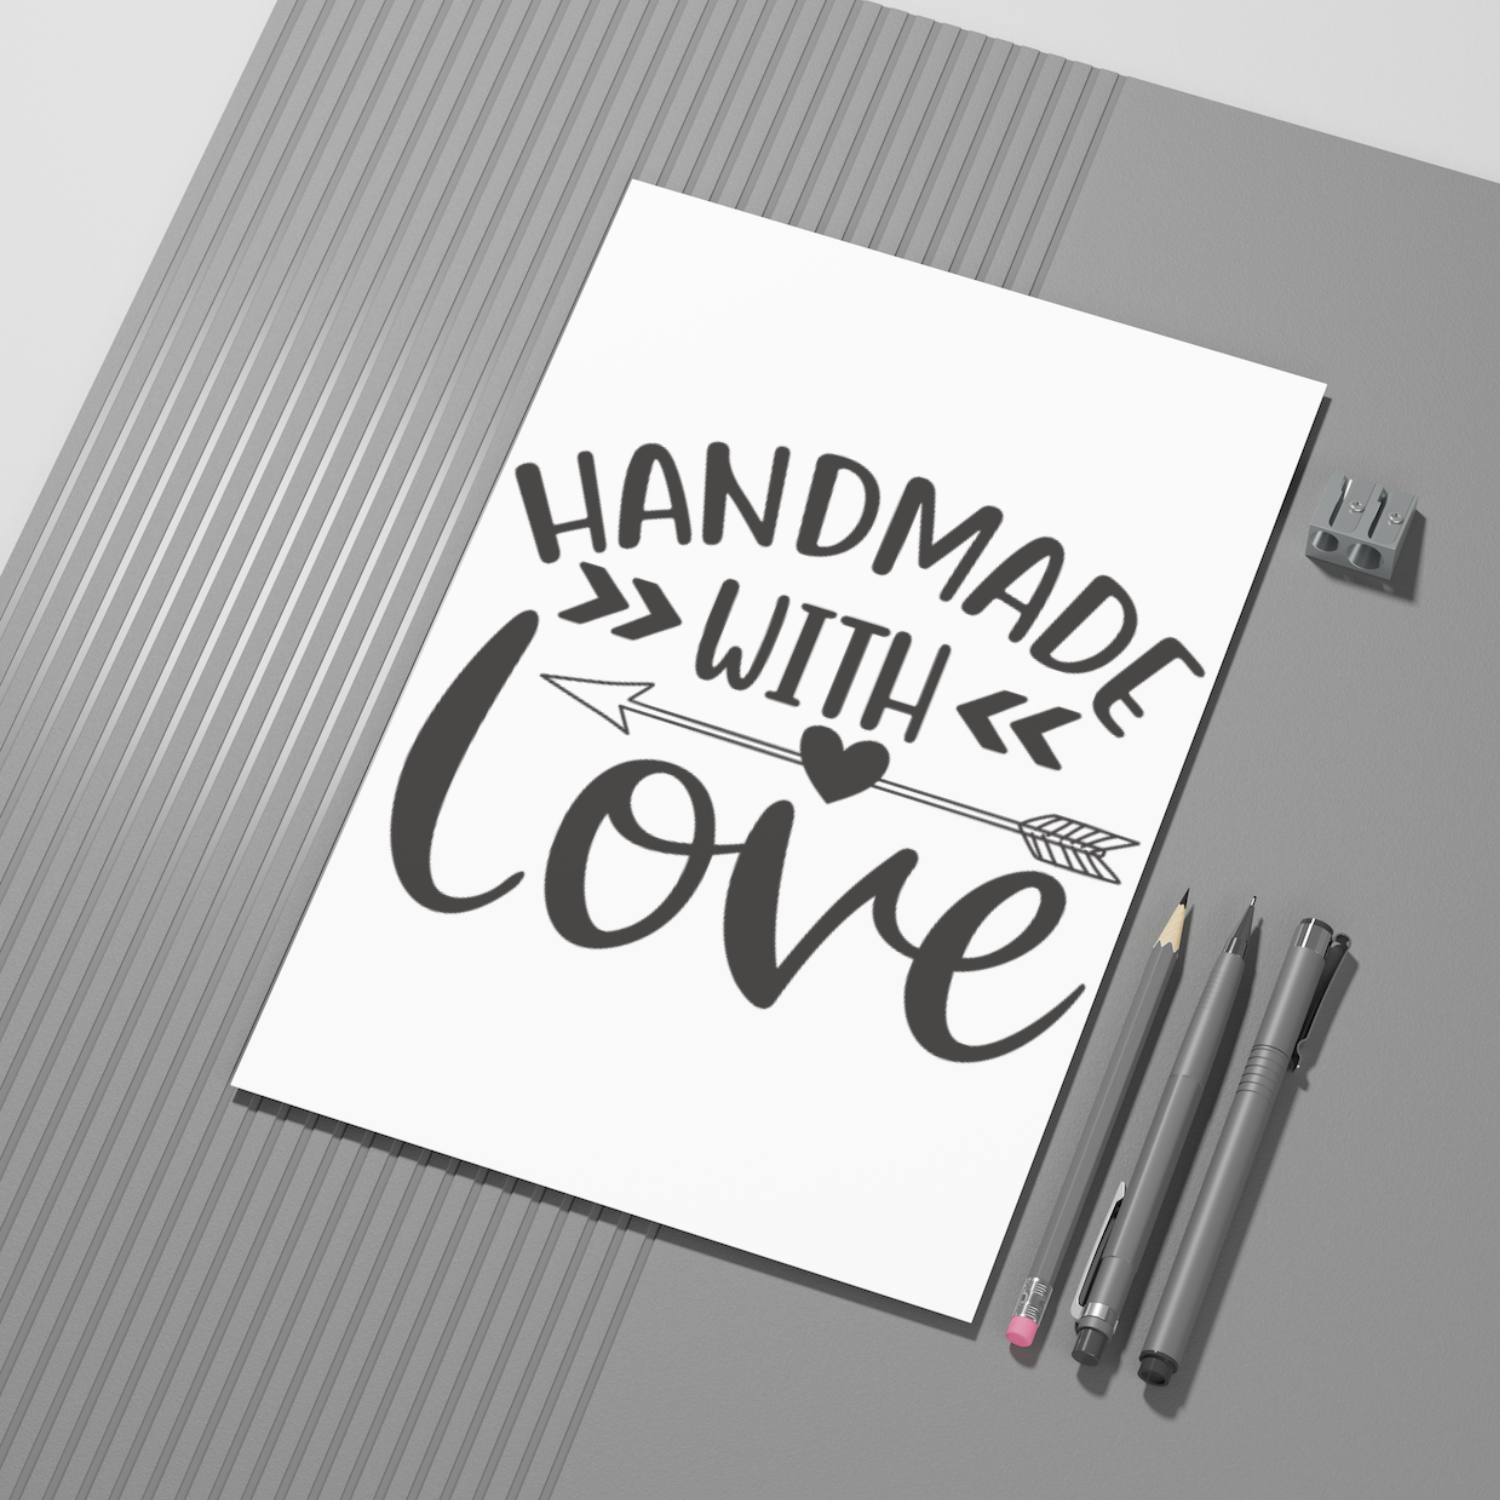 HANDMADE WITH LOVE SVG | Digital Download | Cut File | SVG